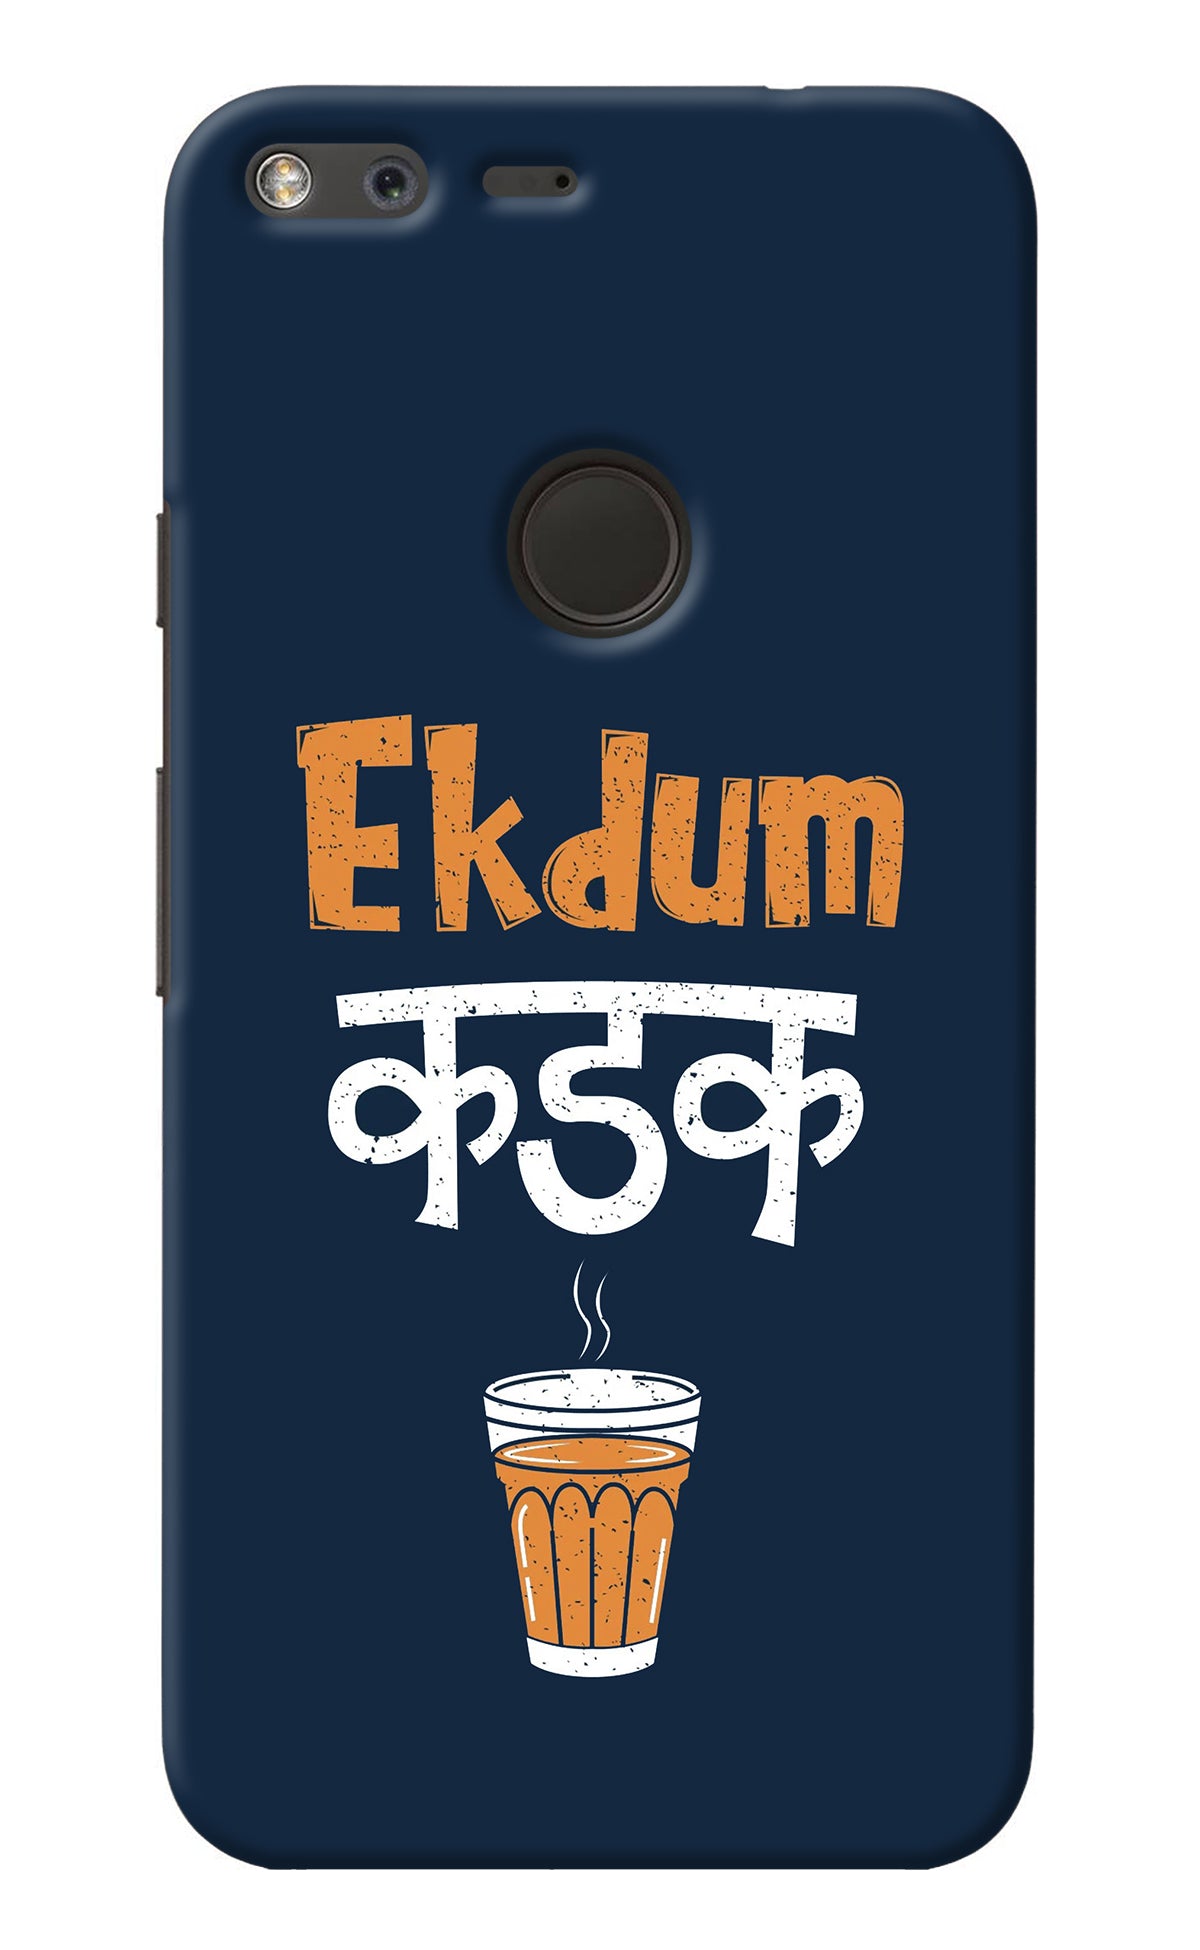 Ekdum Kadak Chai Google Pixel XL Back Cover